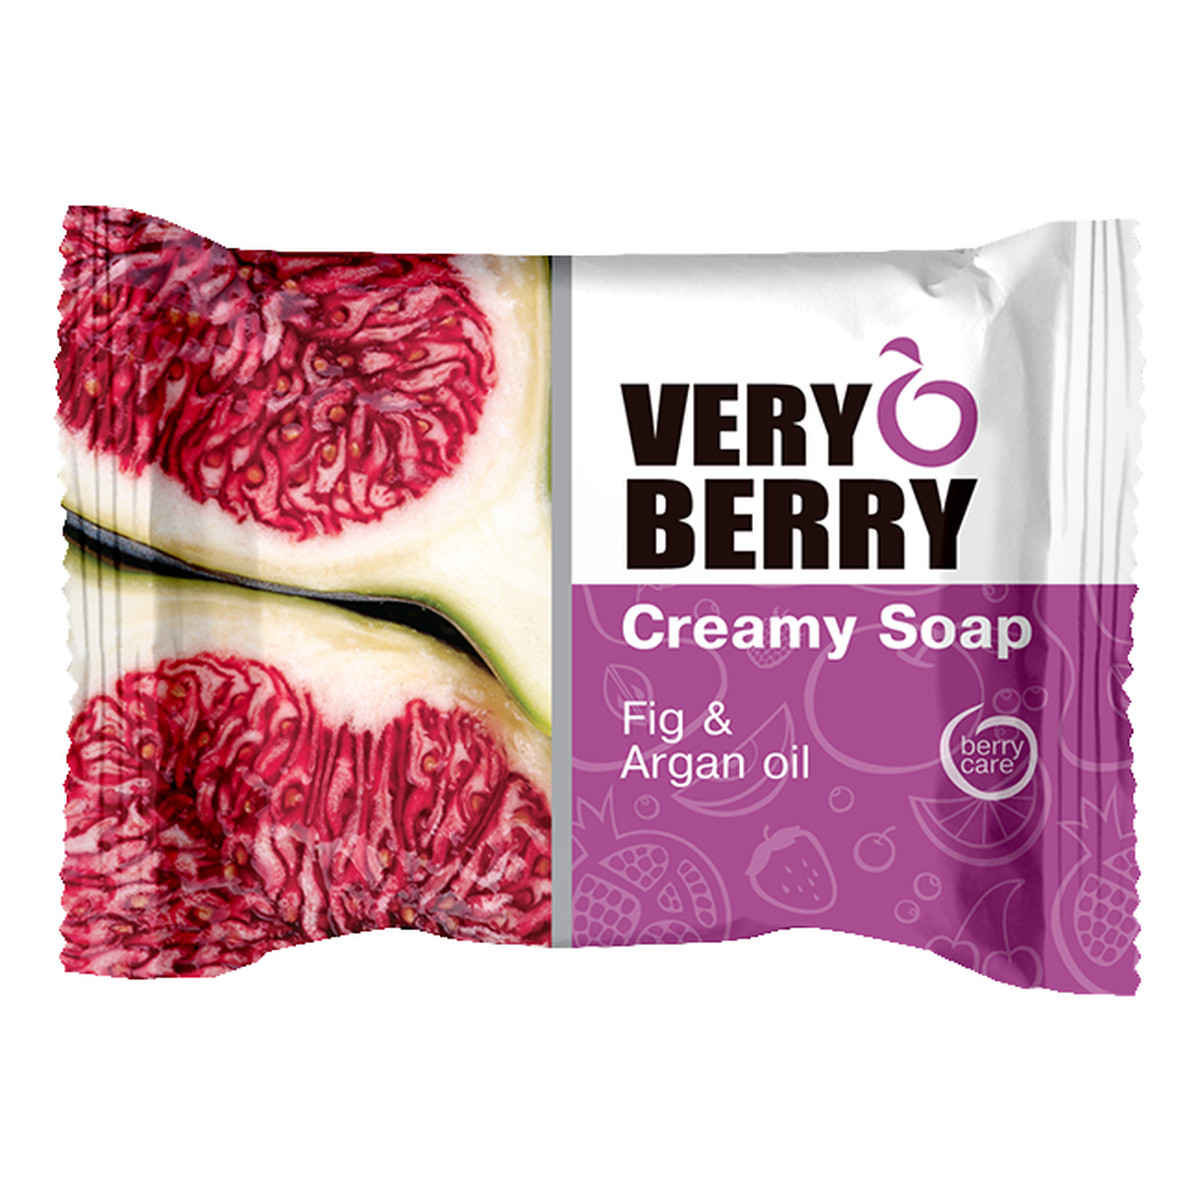 Very Berry Mydło kremowe w kostce Fig & Argan Oil 100g